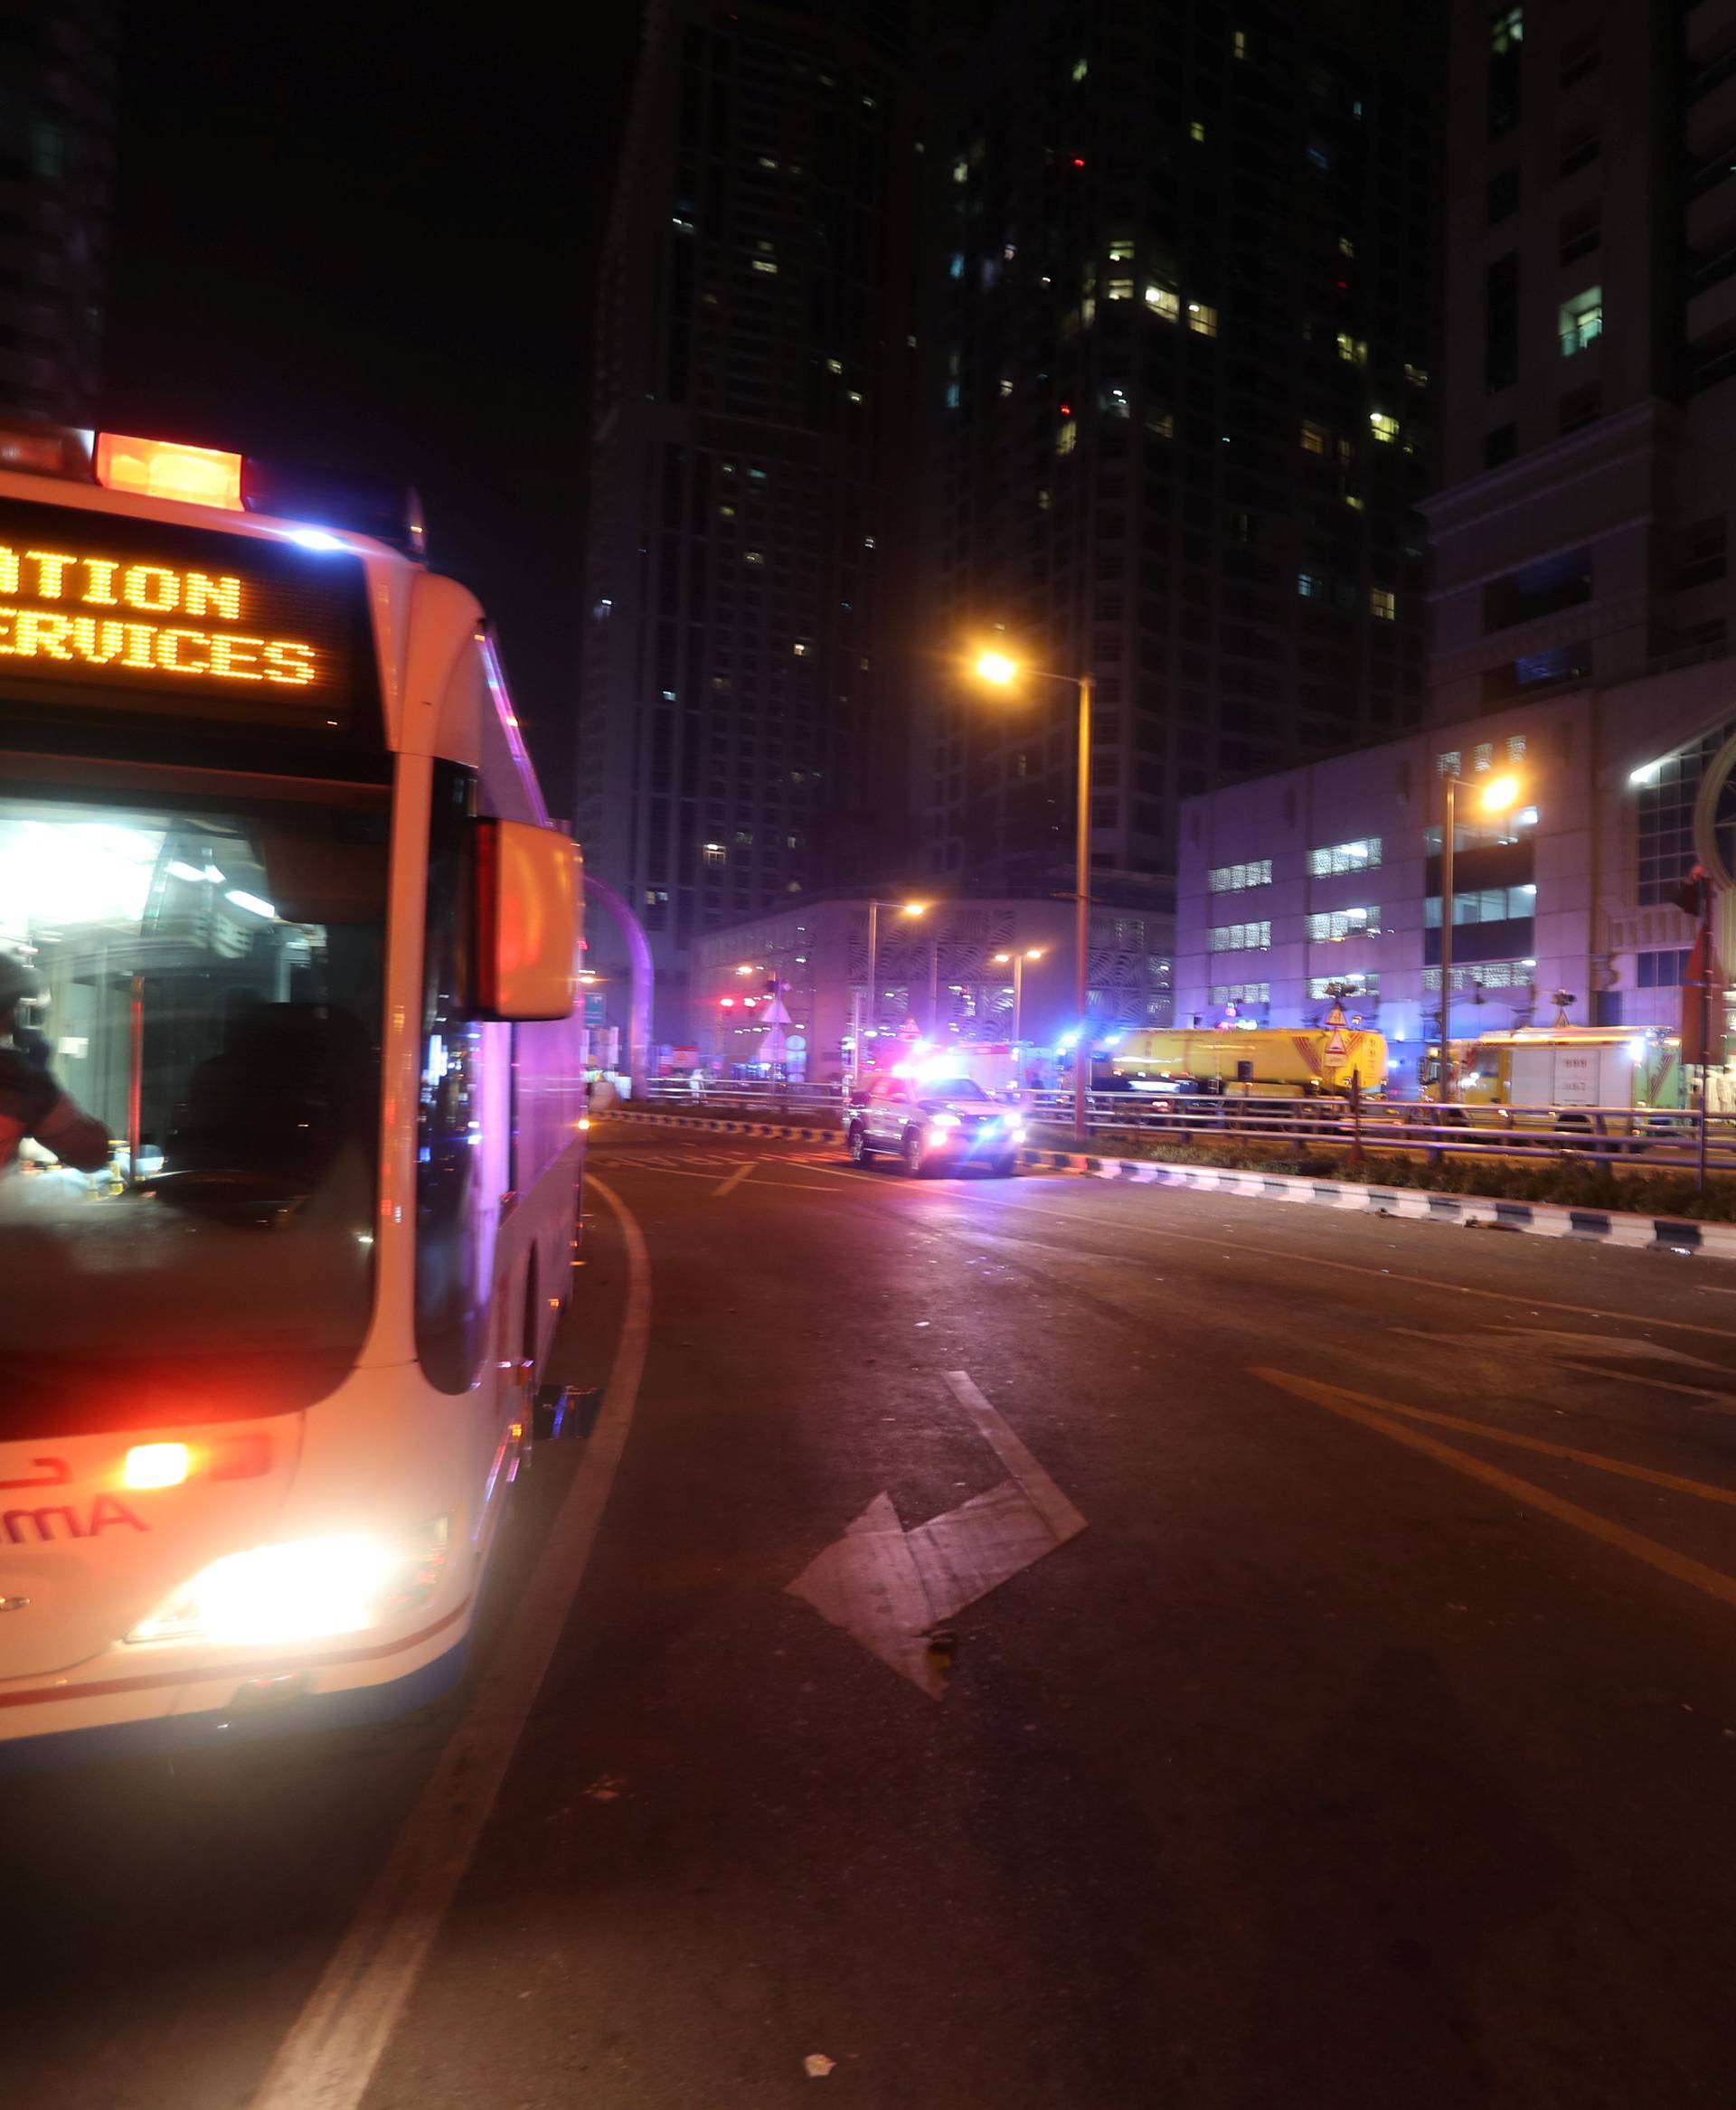 Dubai Emergency Response teams and Dubai police are seen on the street near Dubai's Torch tower residential building in the Marina district, Dubai